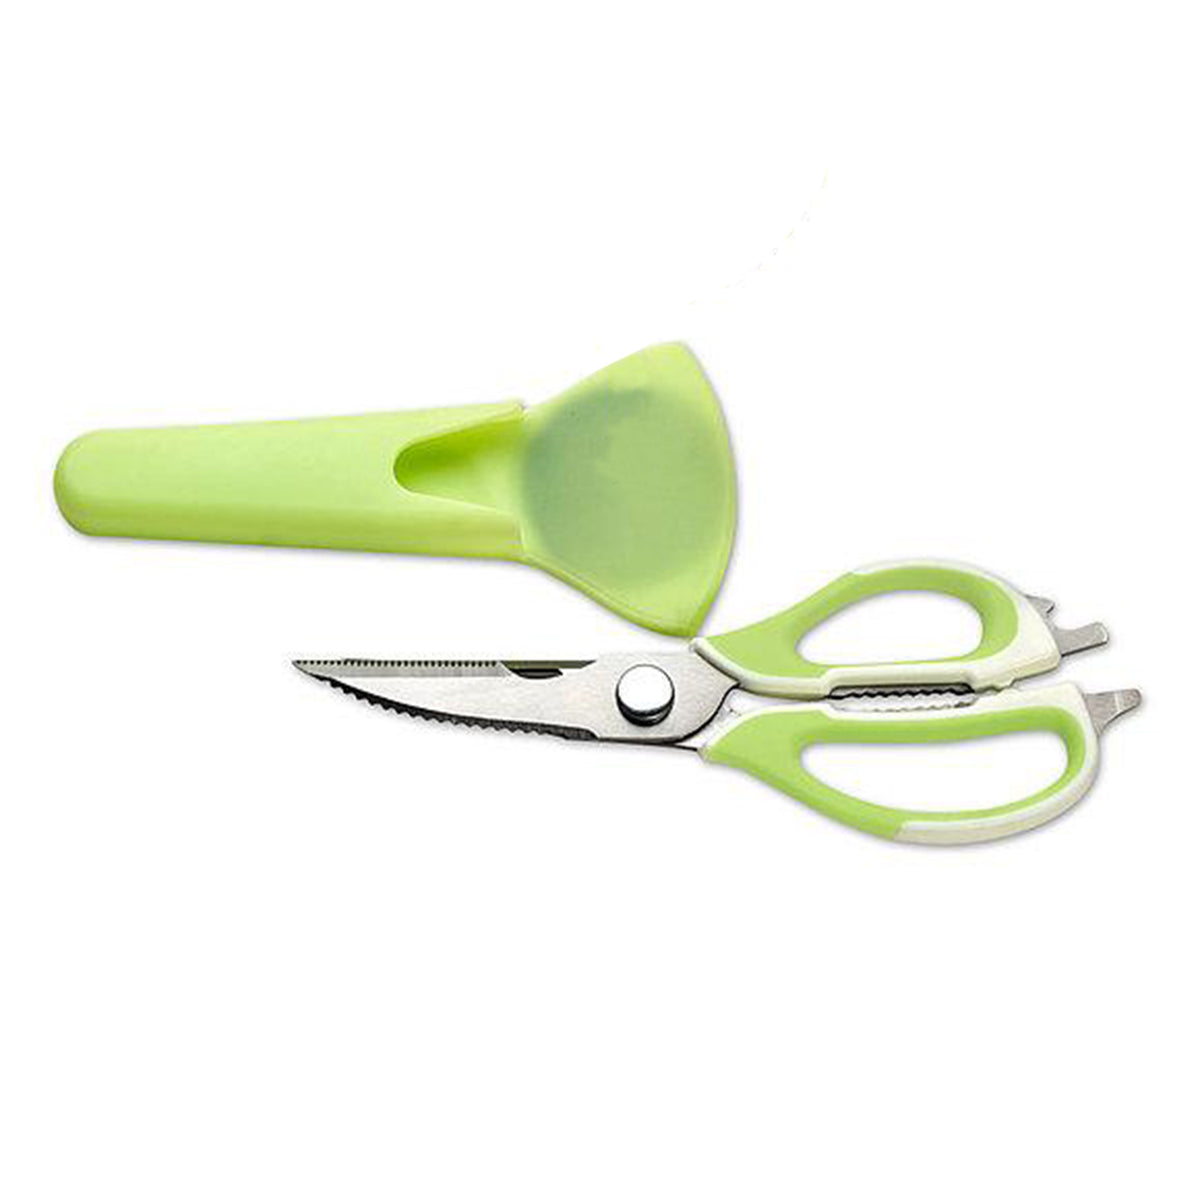 Multi Purpose Scissor - Green ColorSize: 23 cm